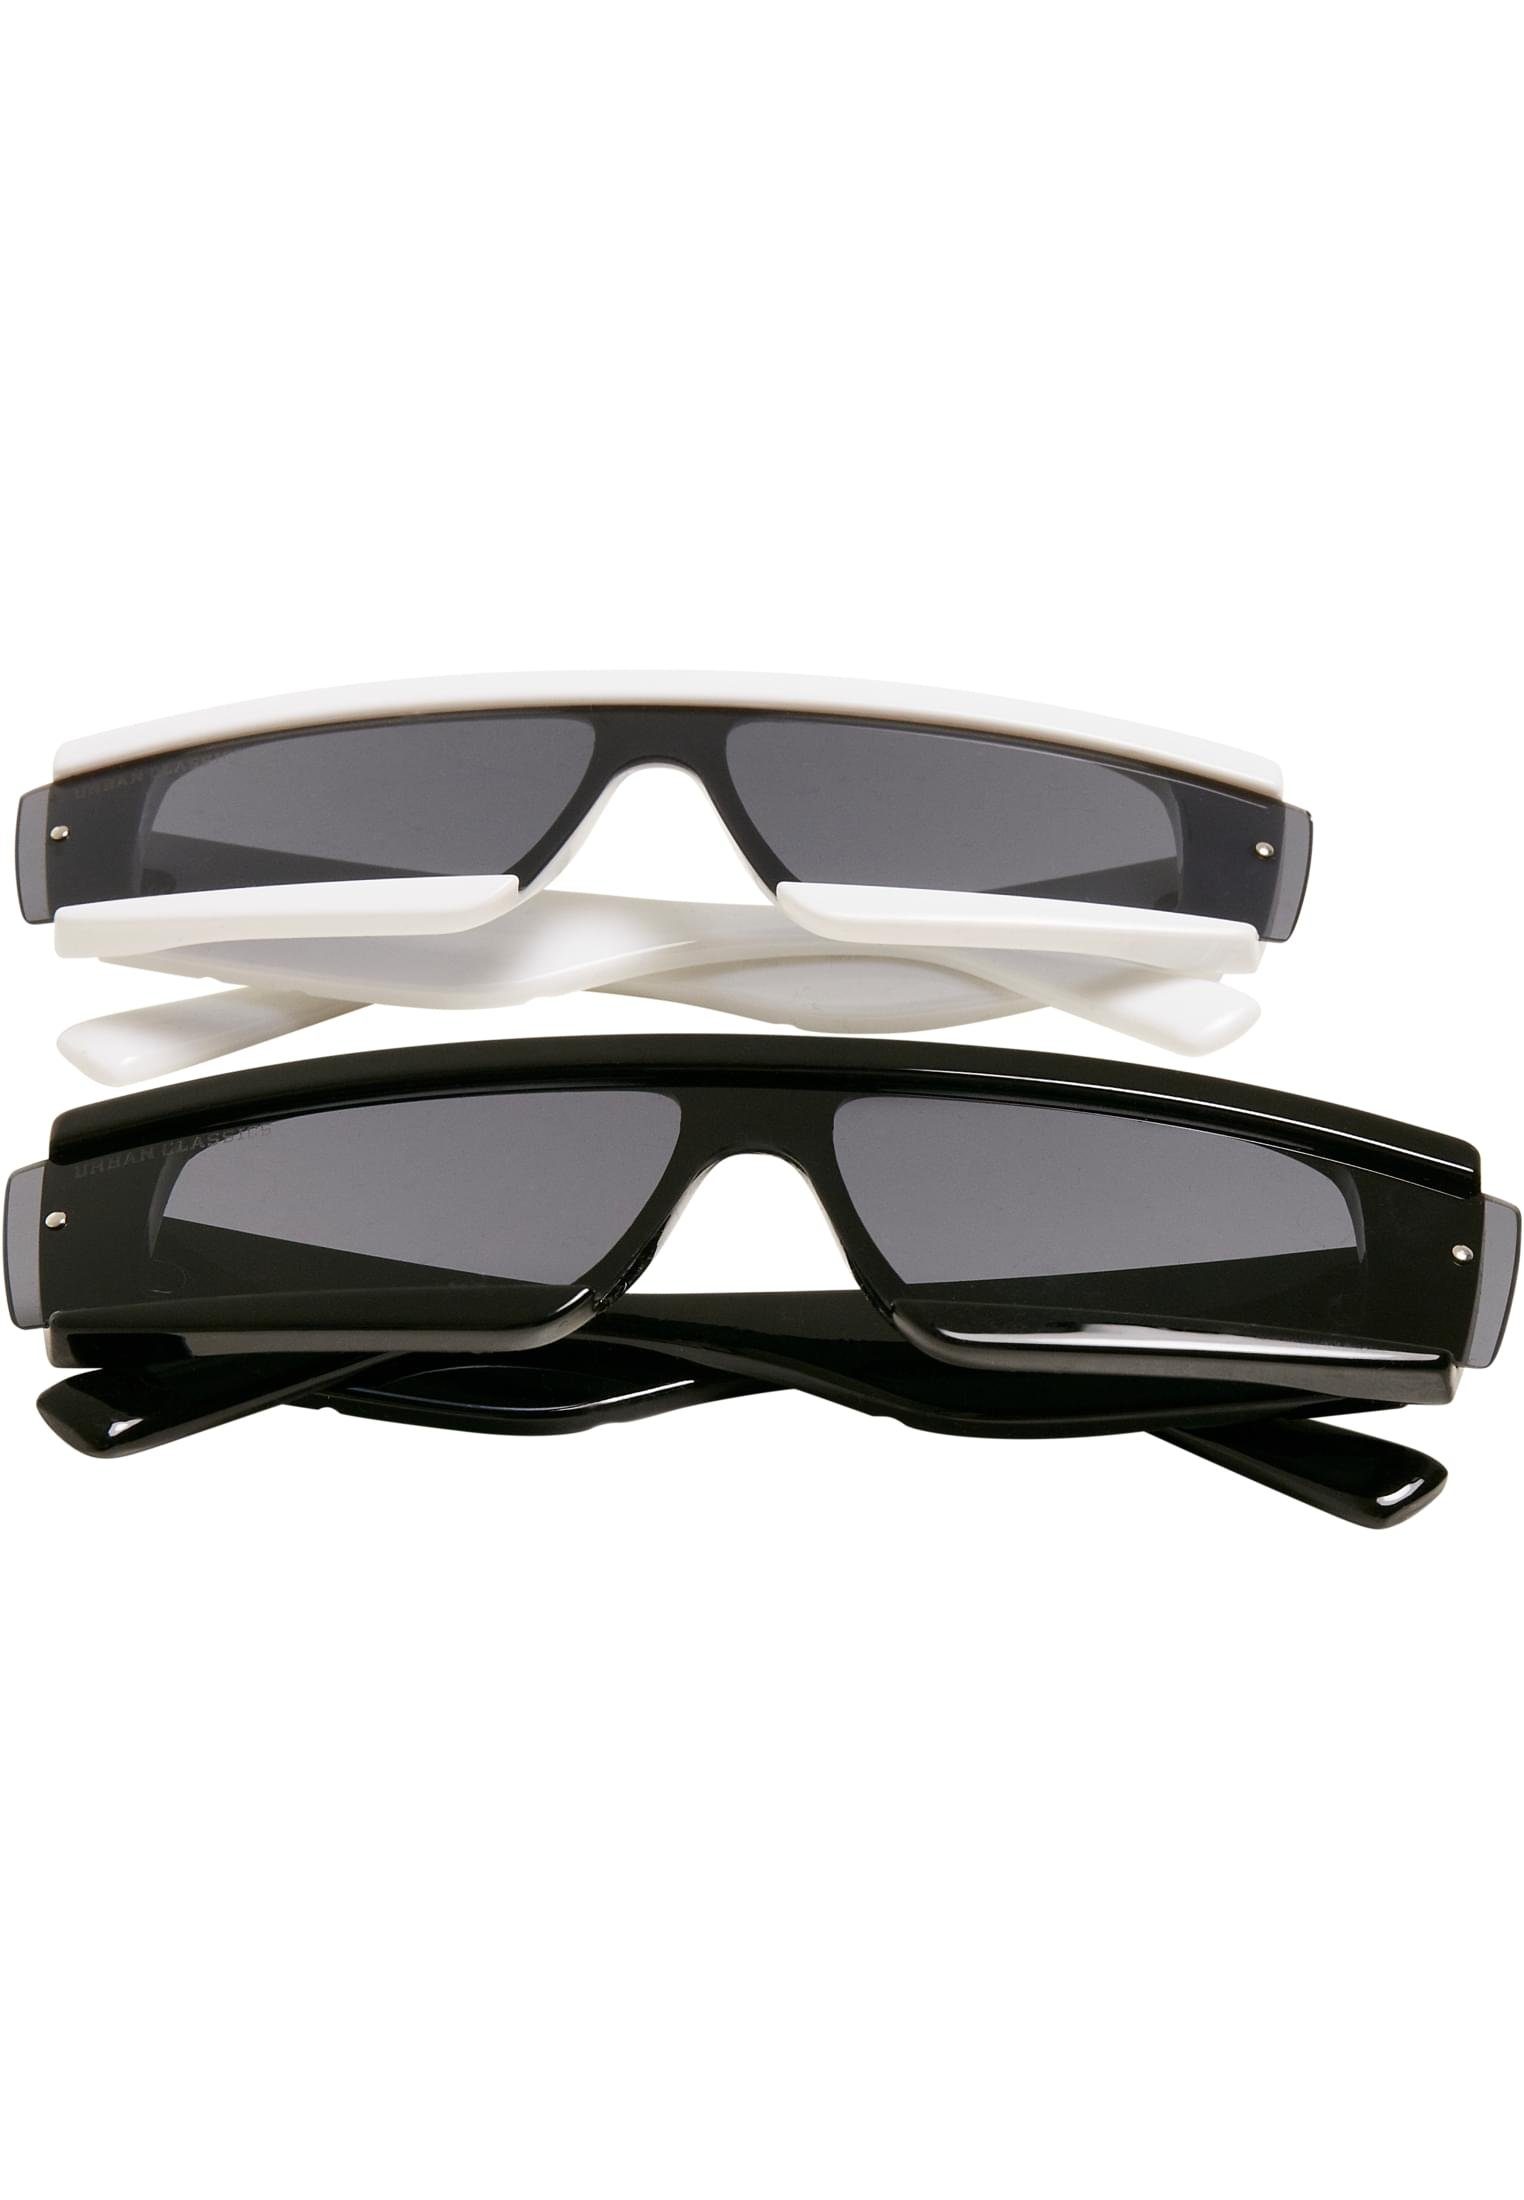 2-Pack Alabama black/white Sunglasses CLASSICS Unisex Sonnenbrille URBAN